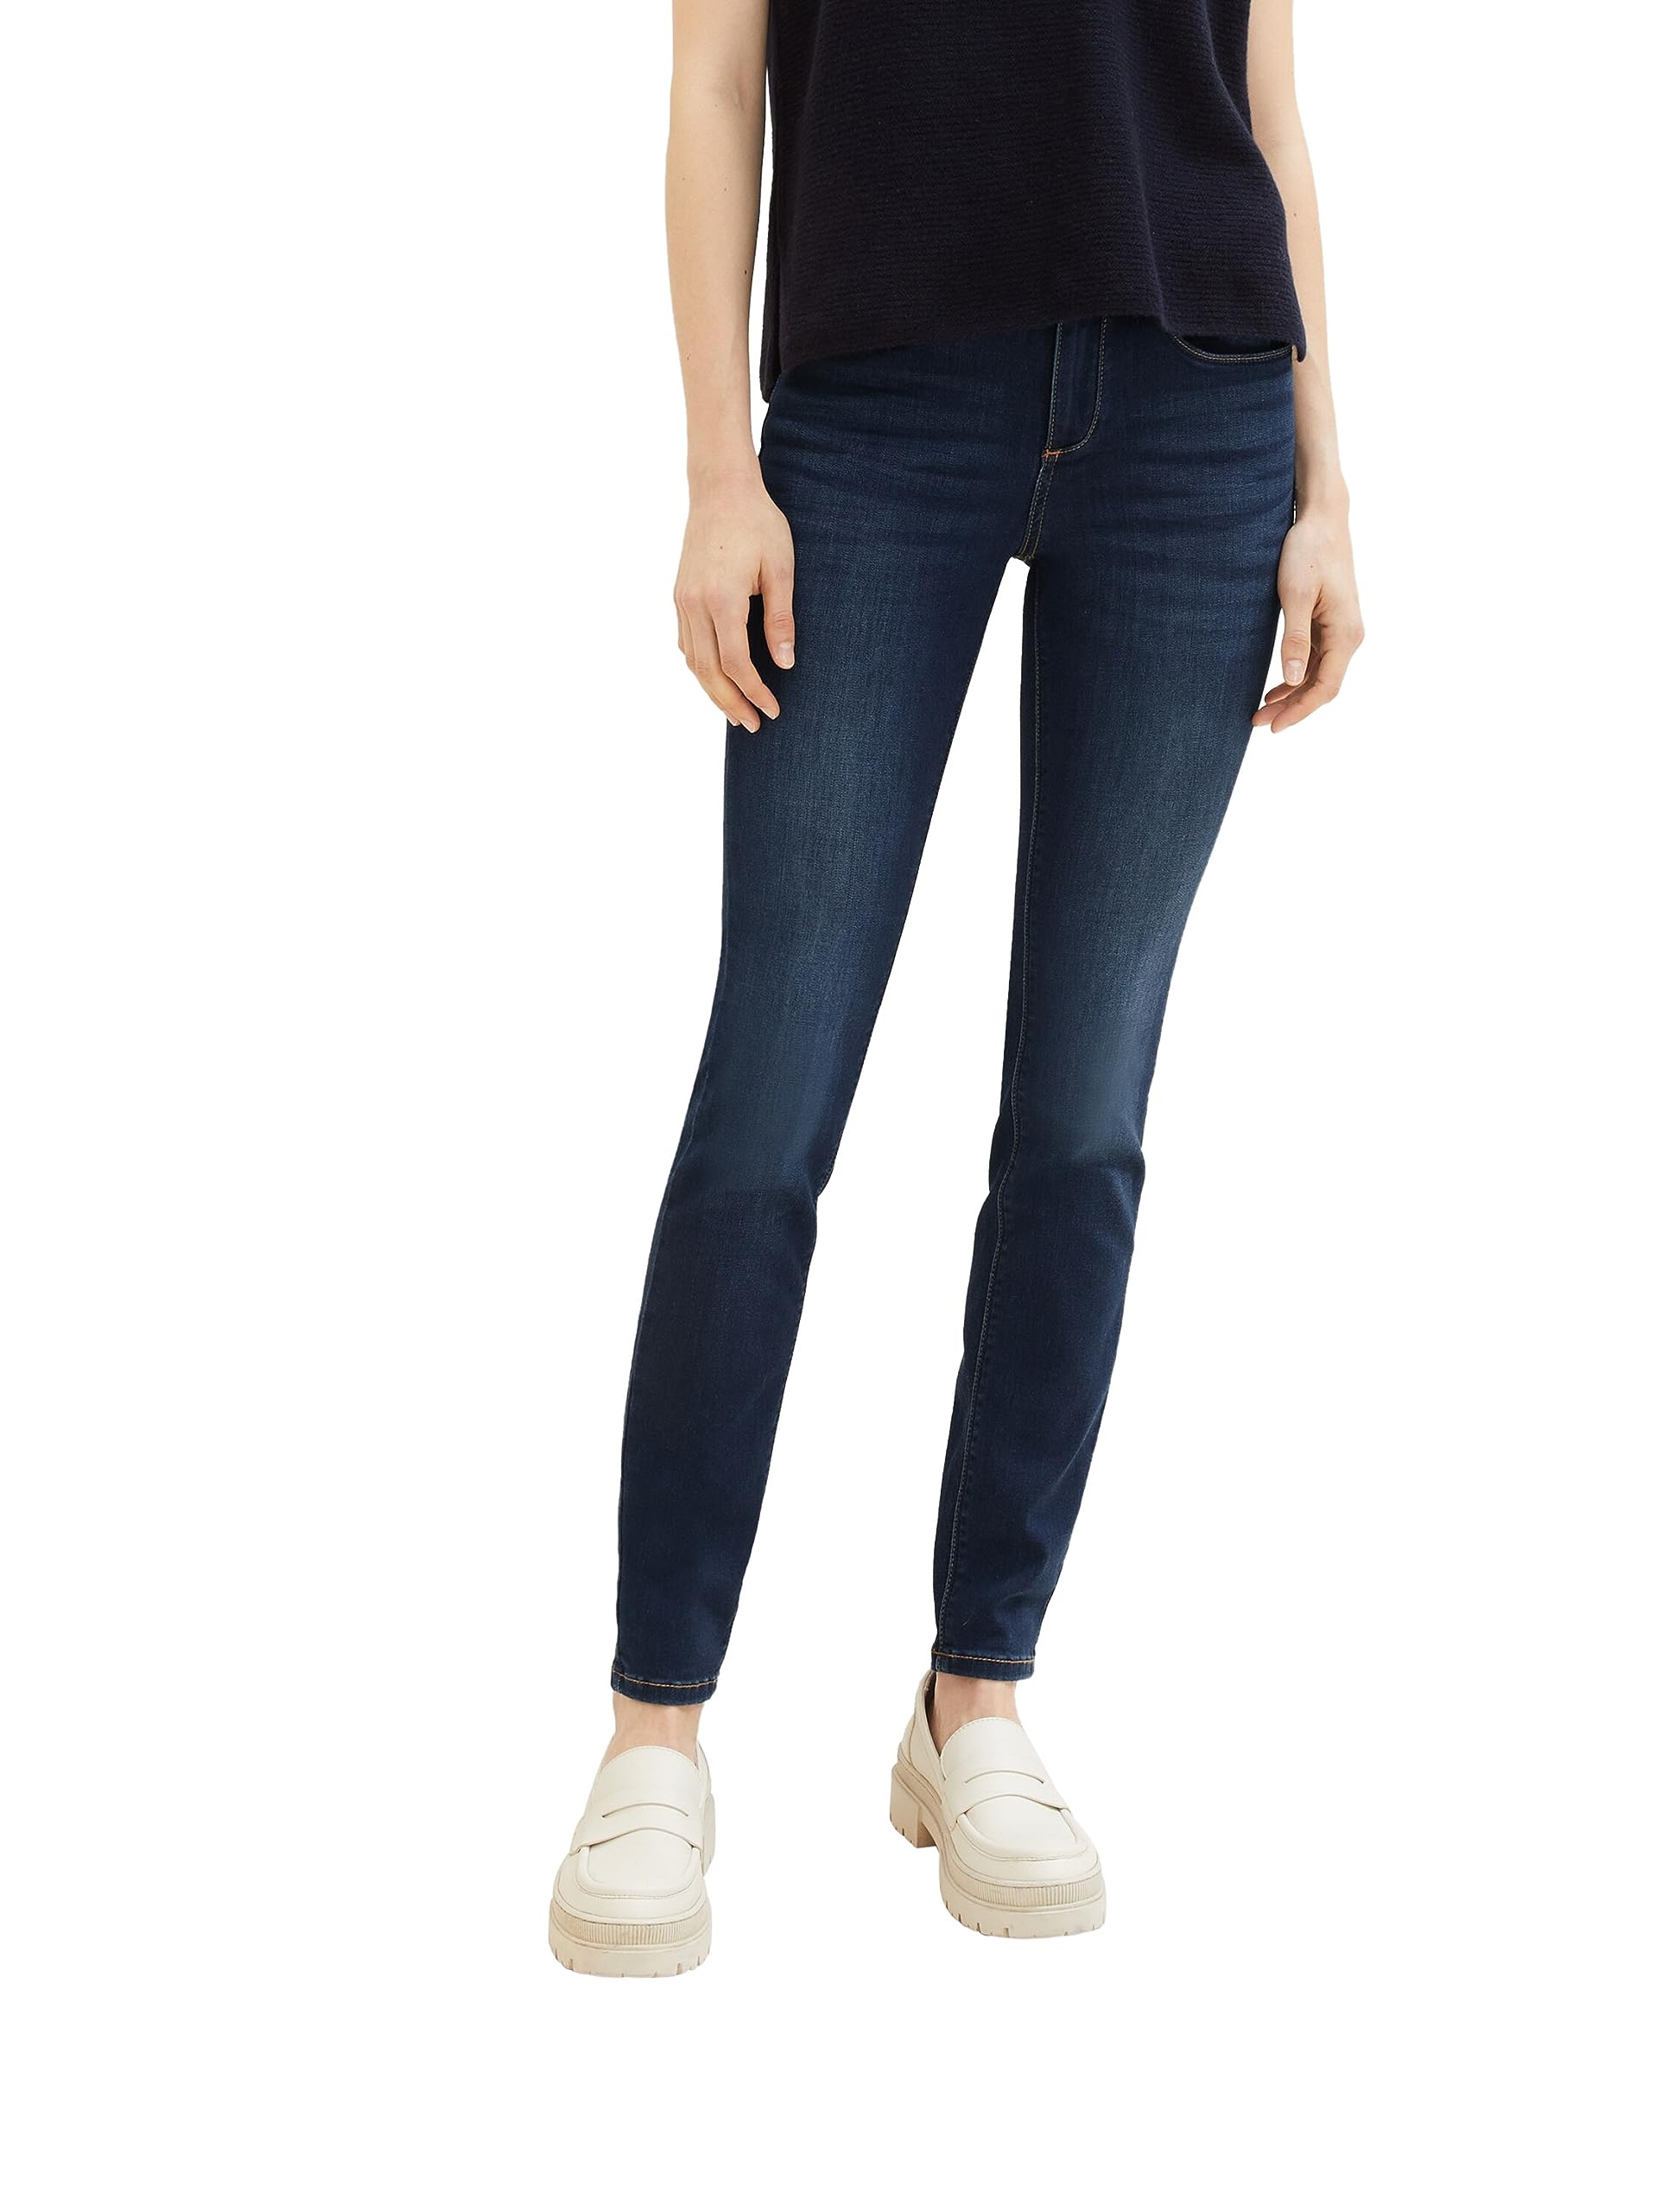 TOM TAILOR Damen 1008122 Alexa Skinny Jeans, 10282 - Dark Stone Wash Denim, 34W / 32L EU